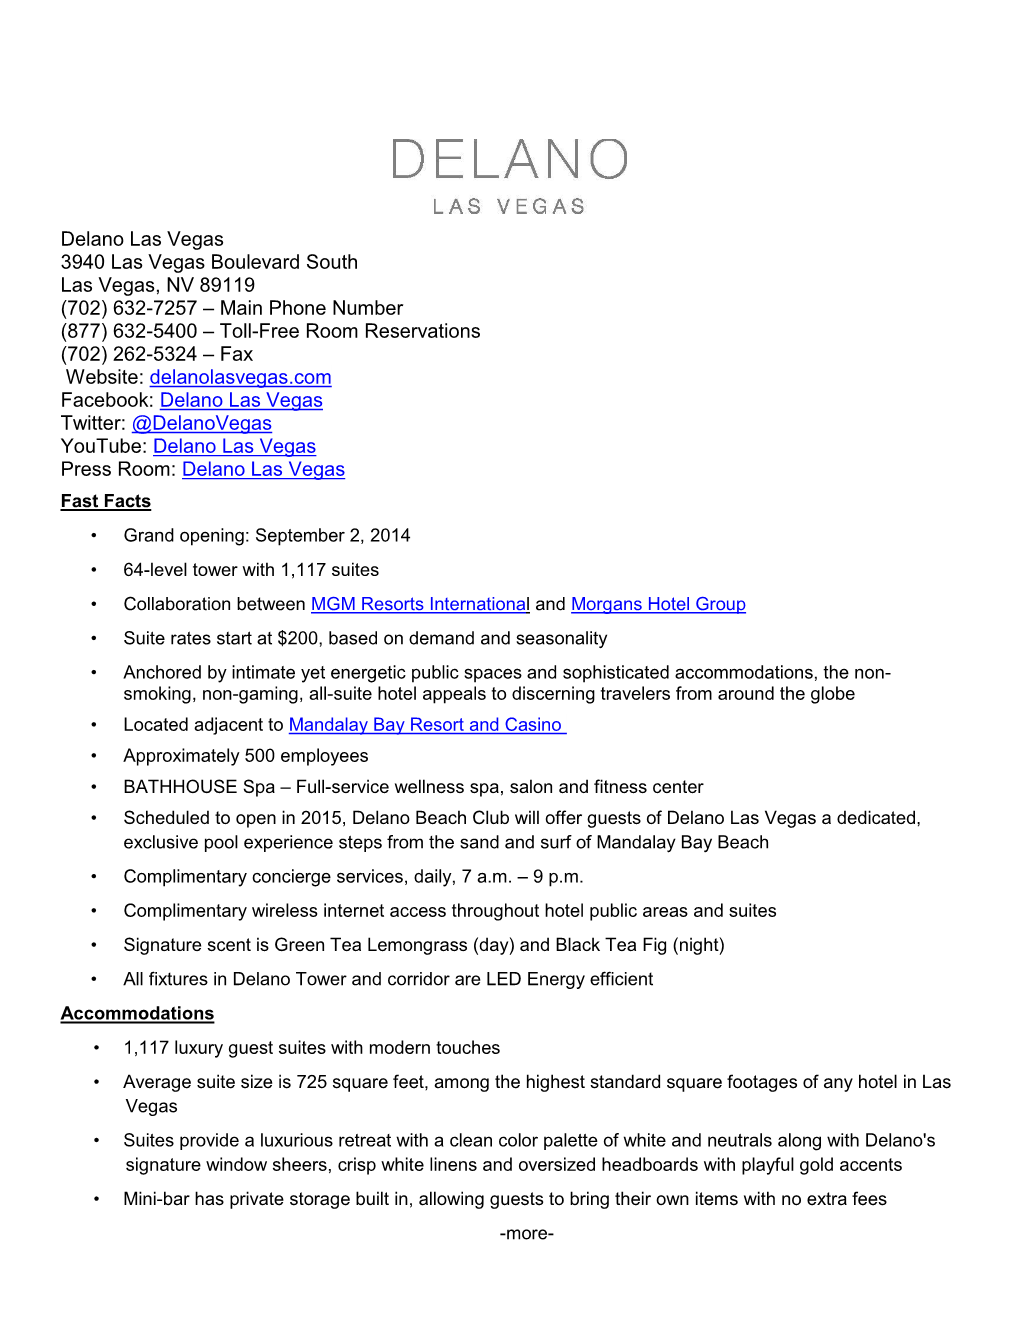 Delano Las Vegas Fact Sheet